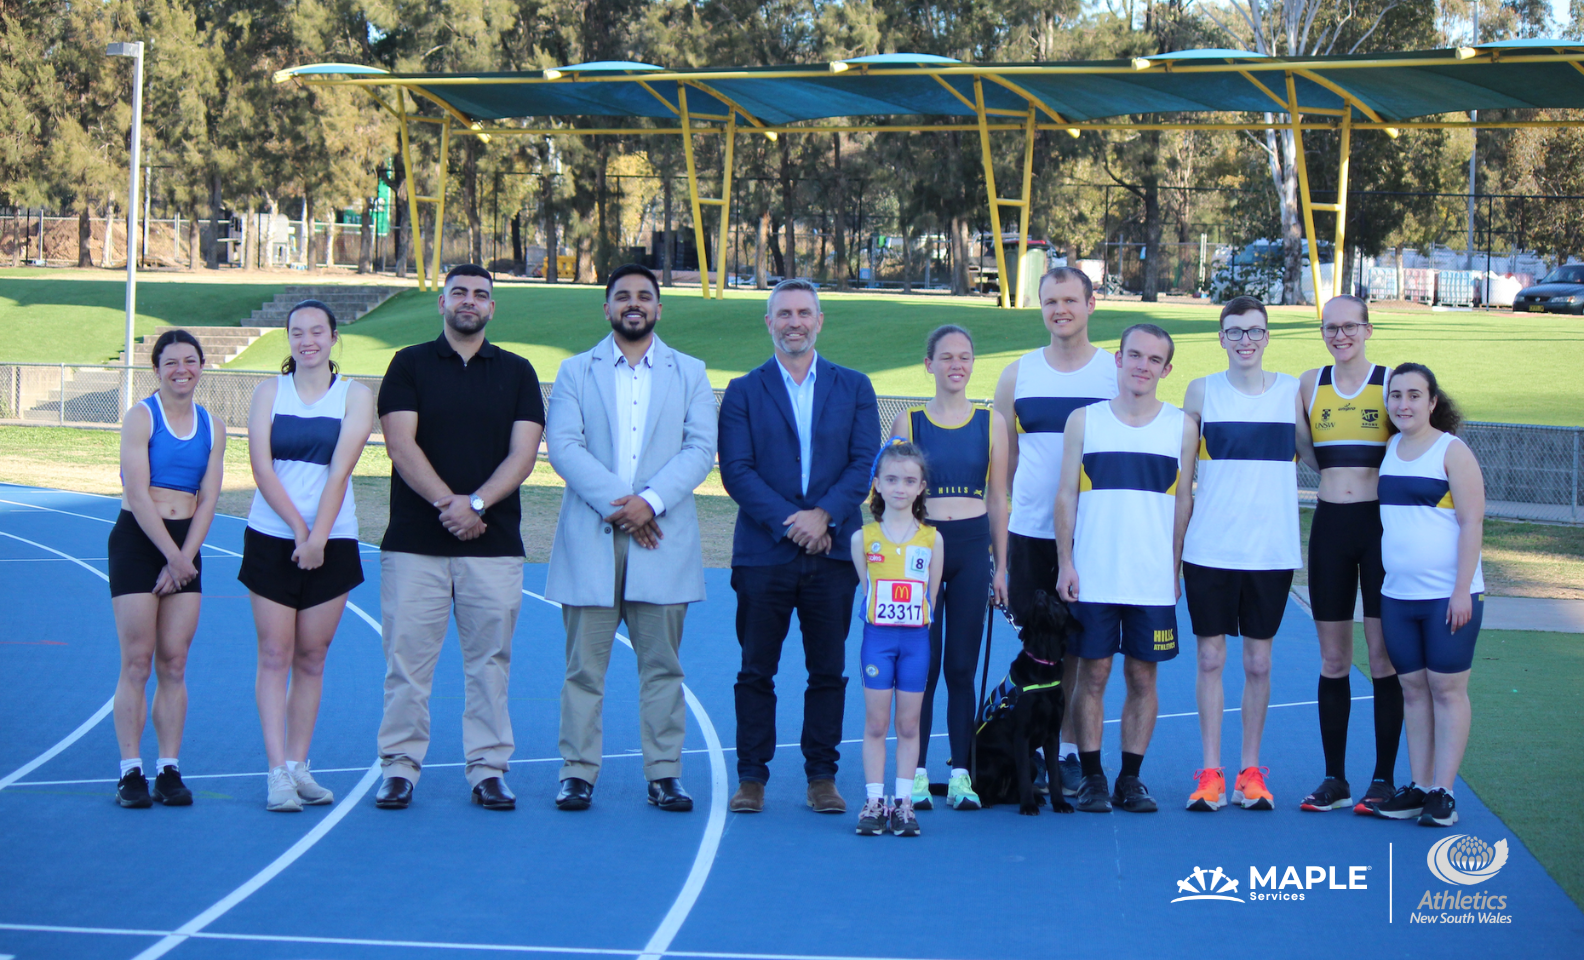 Maple Services announces landmark partnership with Athletics NSW